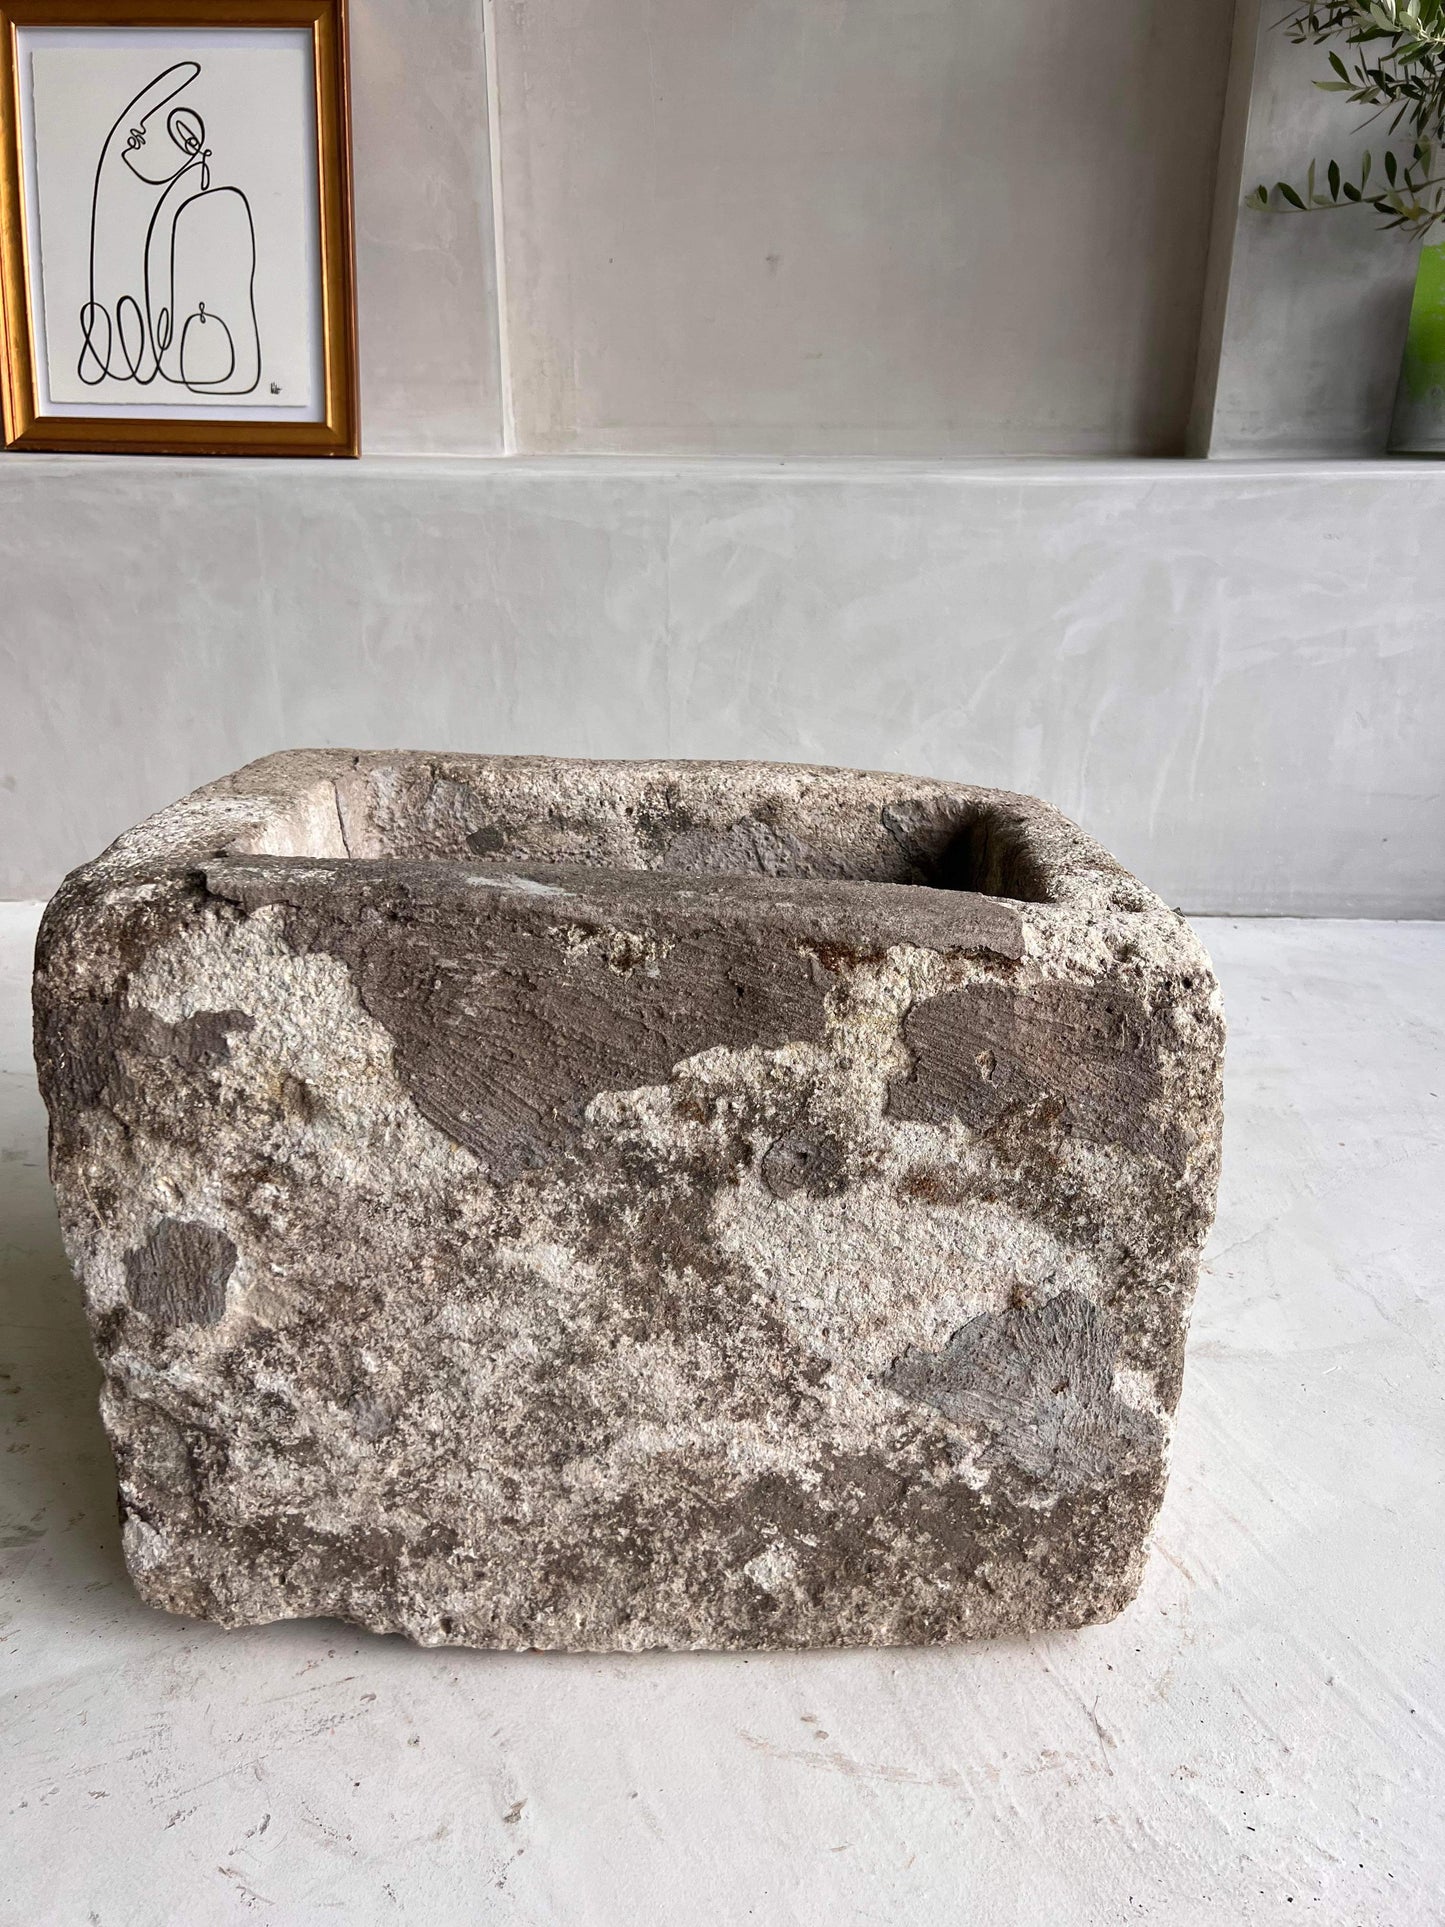 unique antique stone bowl planter limestone interior design by birk los angeles olive tree